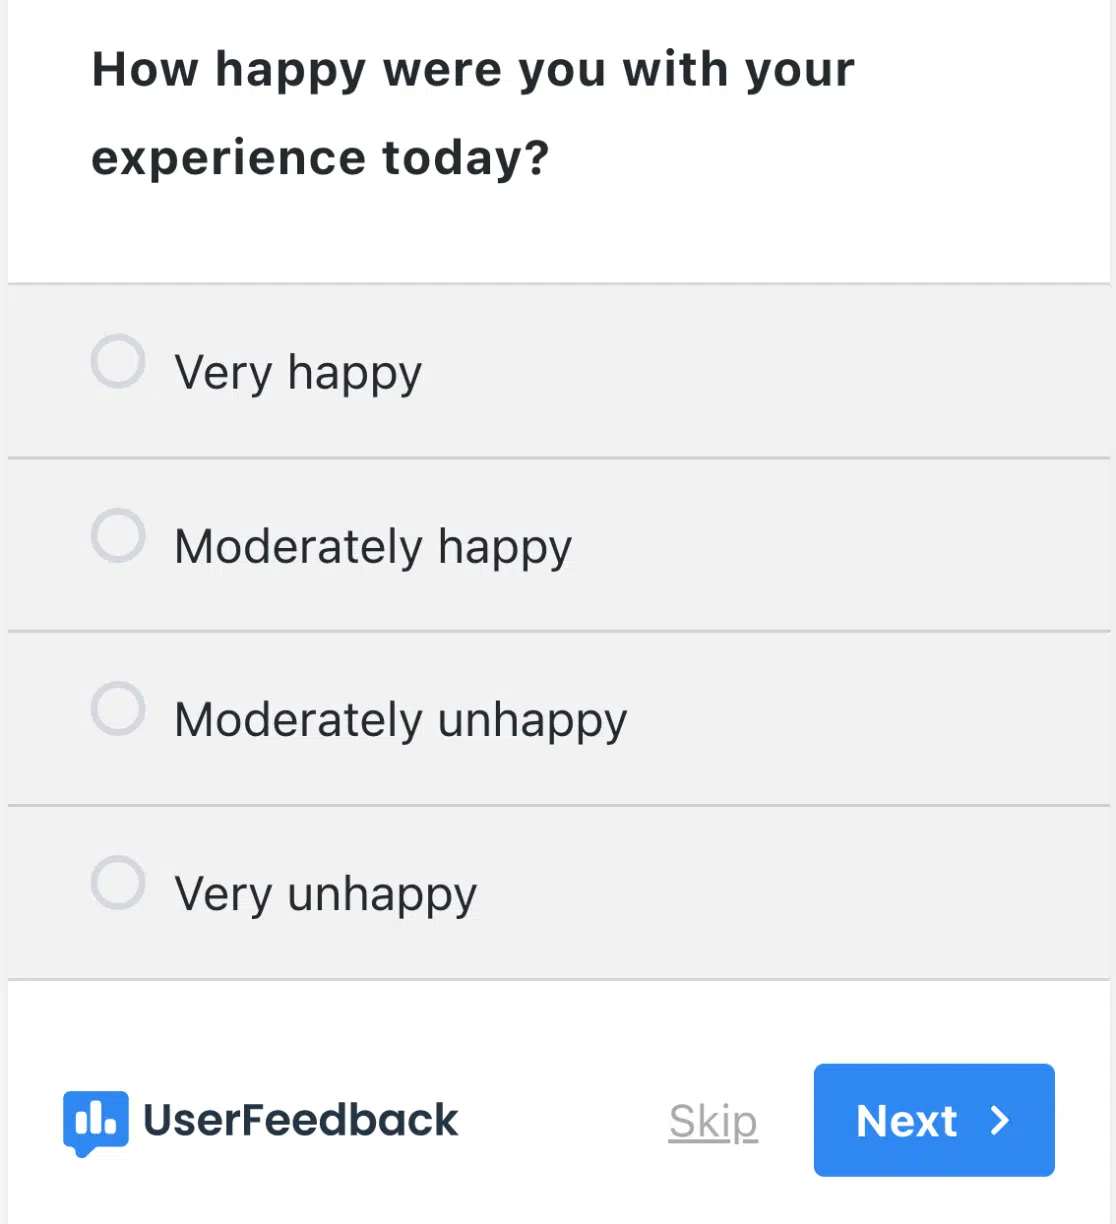 UserFeedback customer satisfaction survey template - binary likert scale 